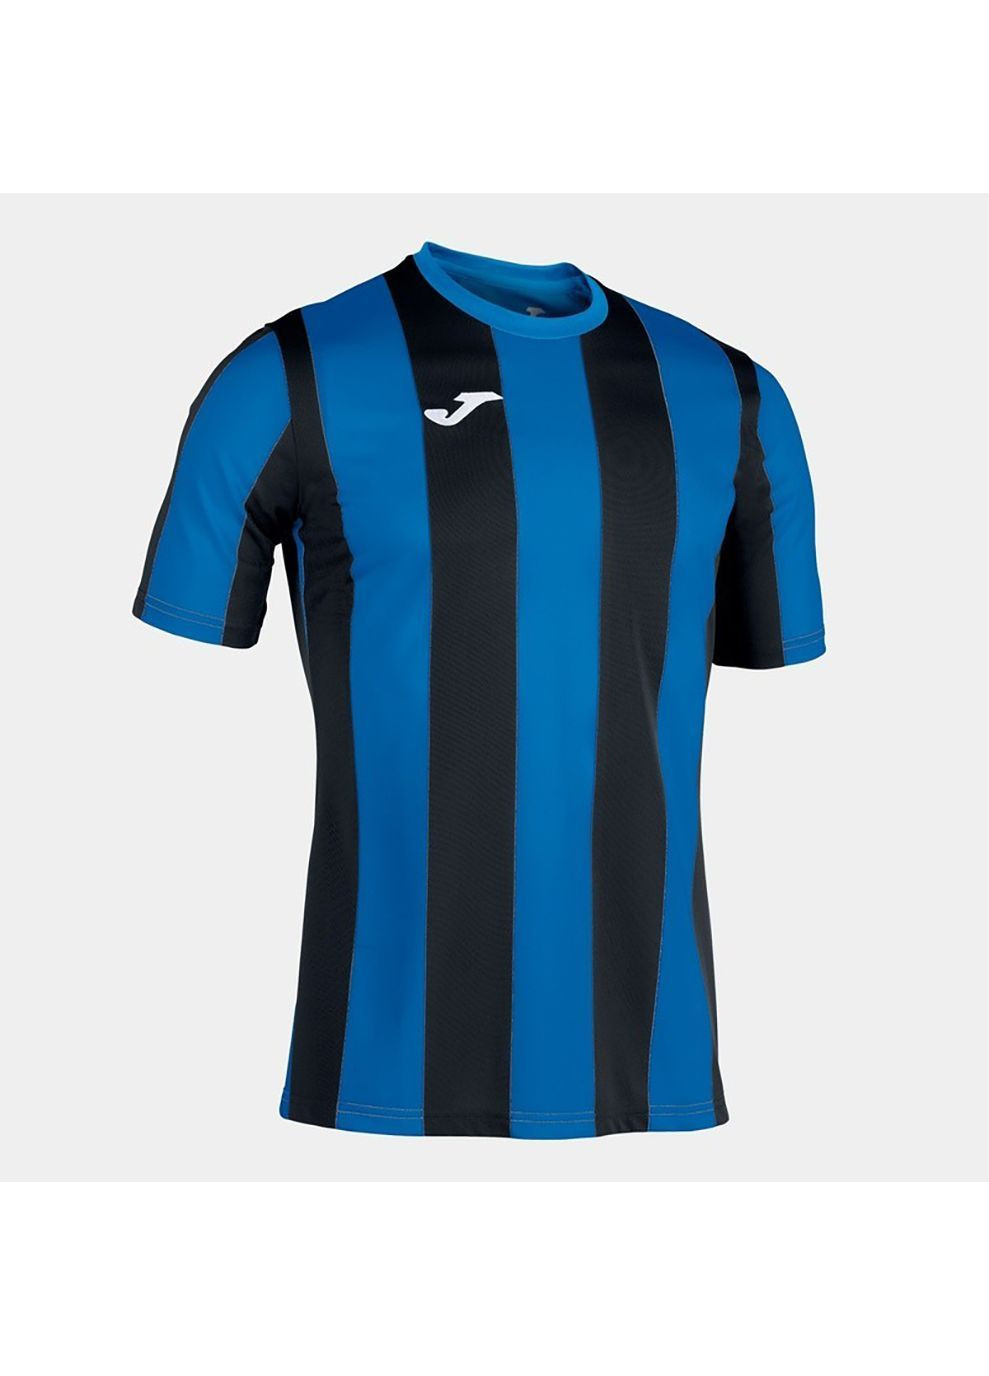 Синяя футболка inter t-shirt royal-black s/s черный,синий Joma